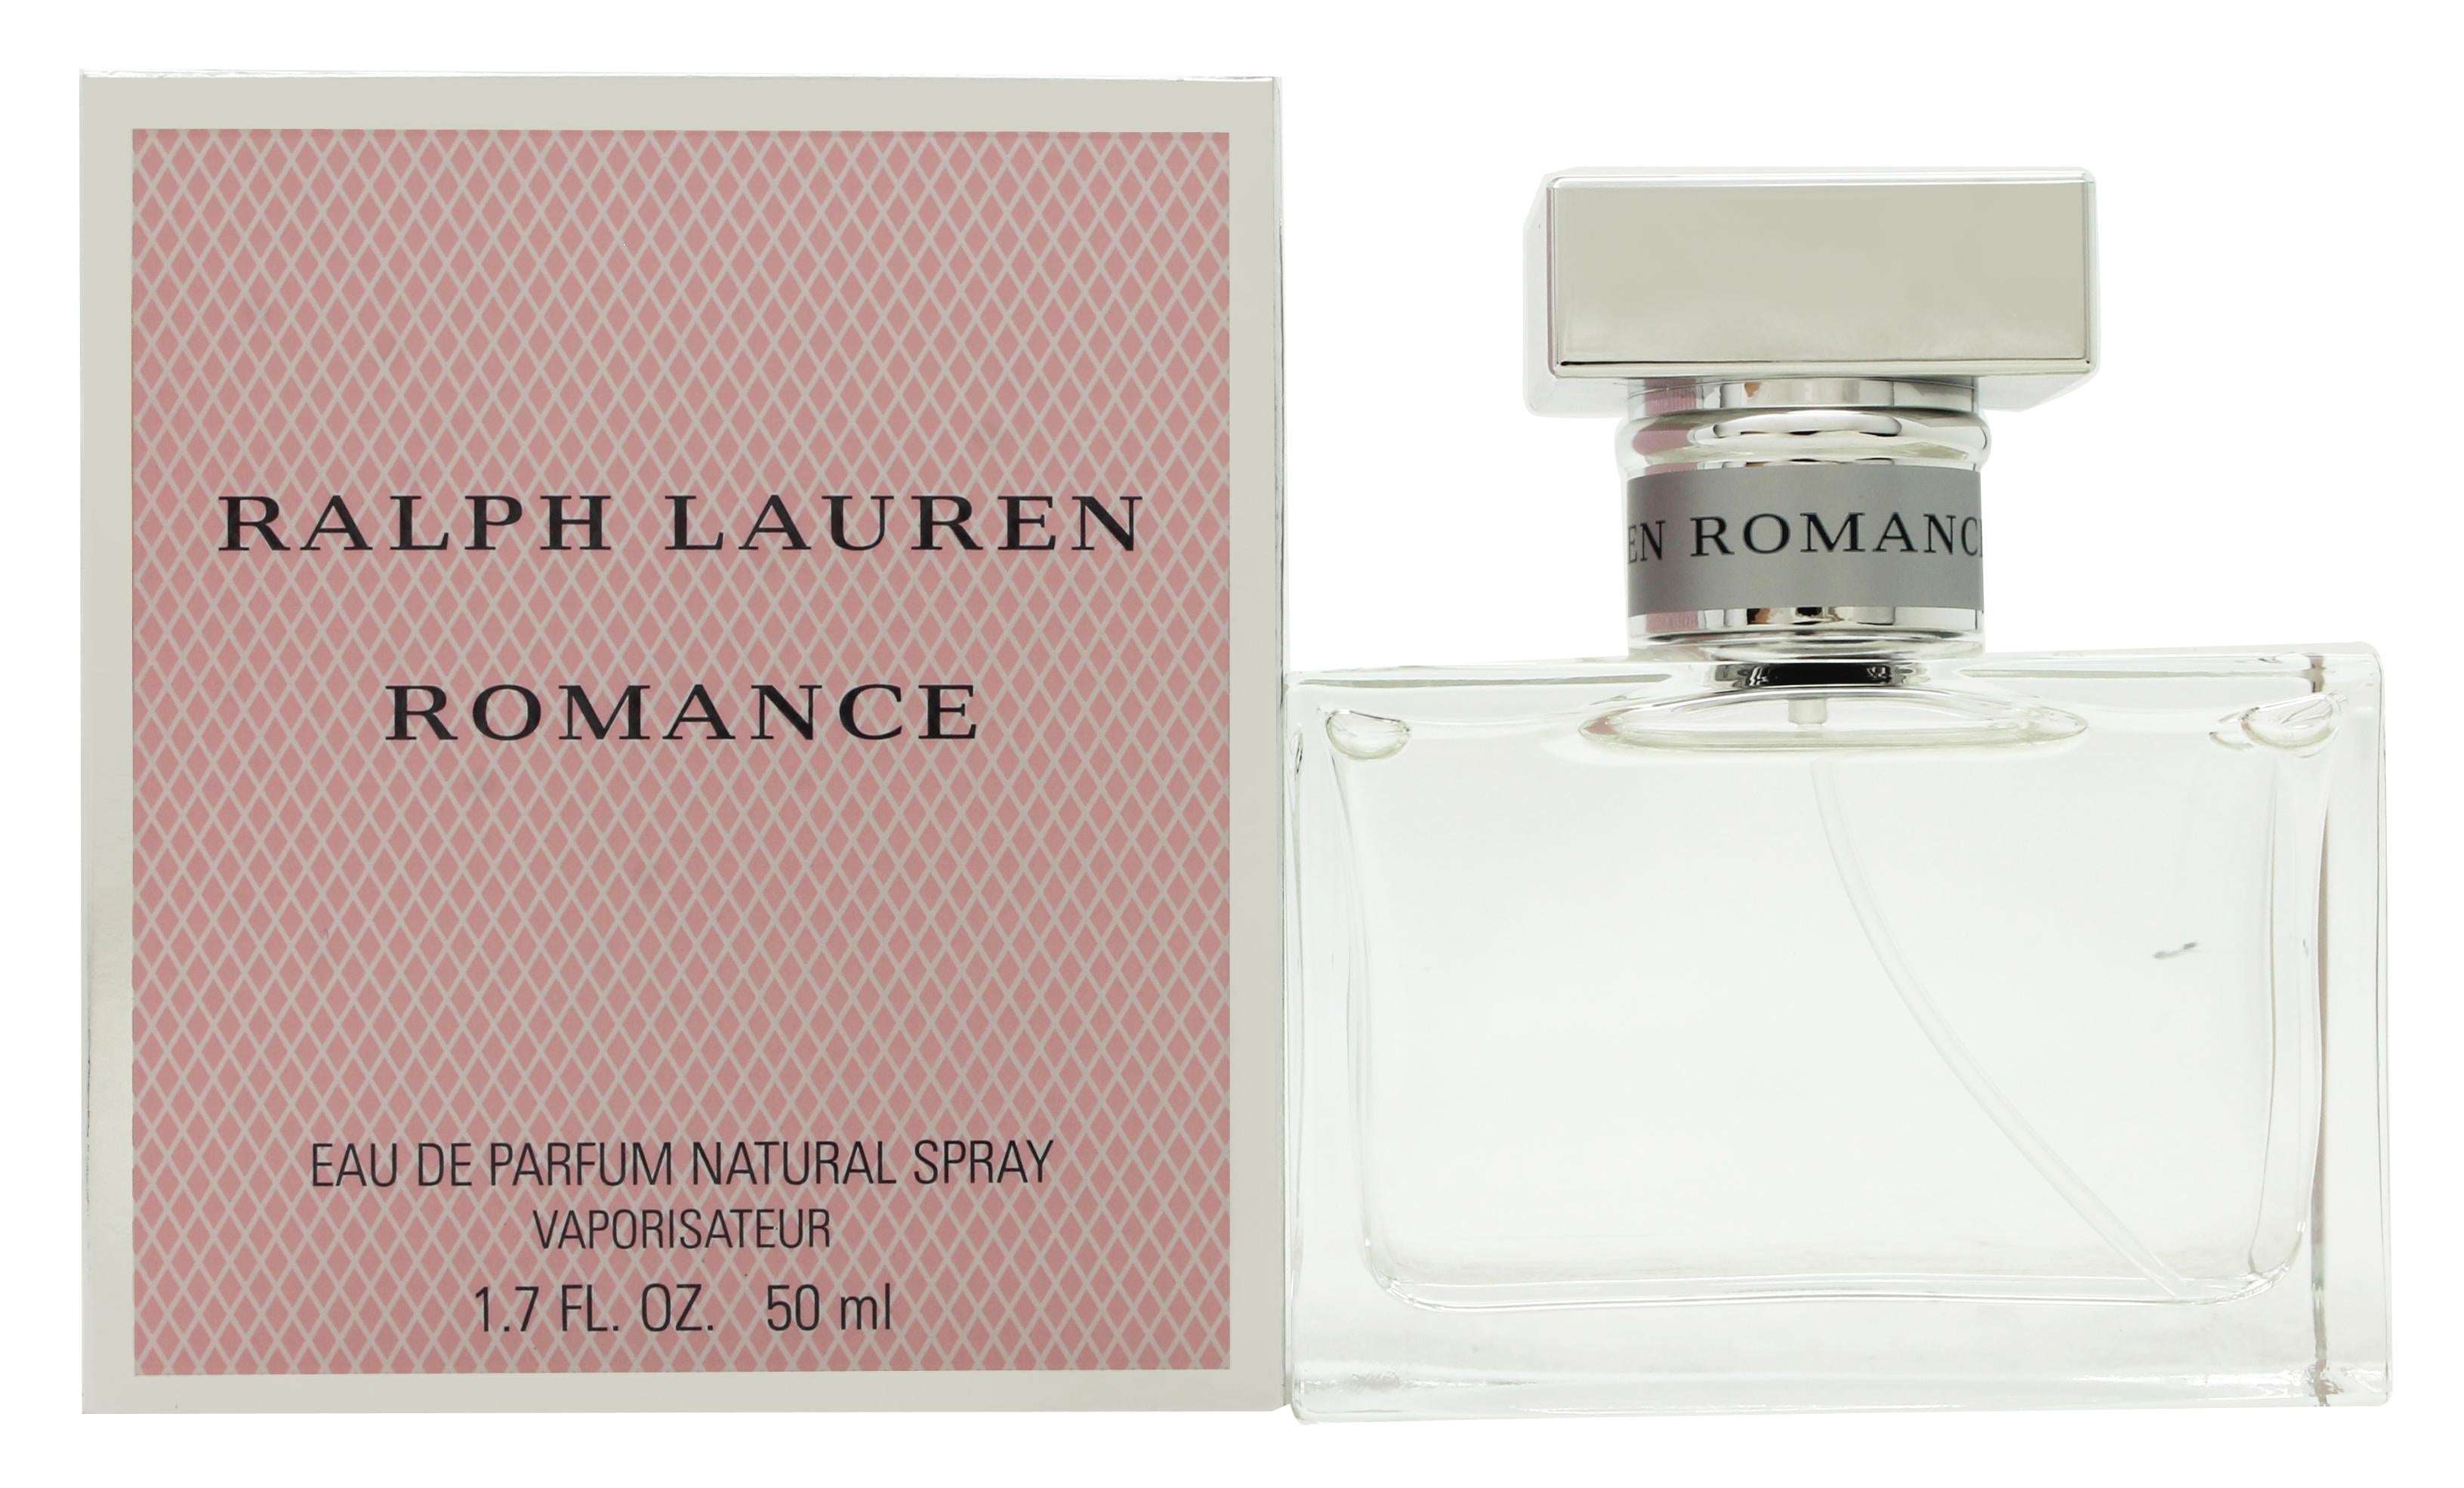 View Ralph Lauren Romance Eau de Parfum 50ml Spray information